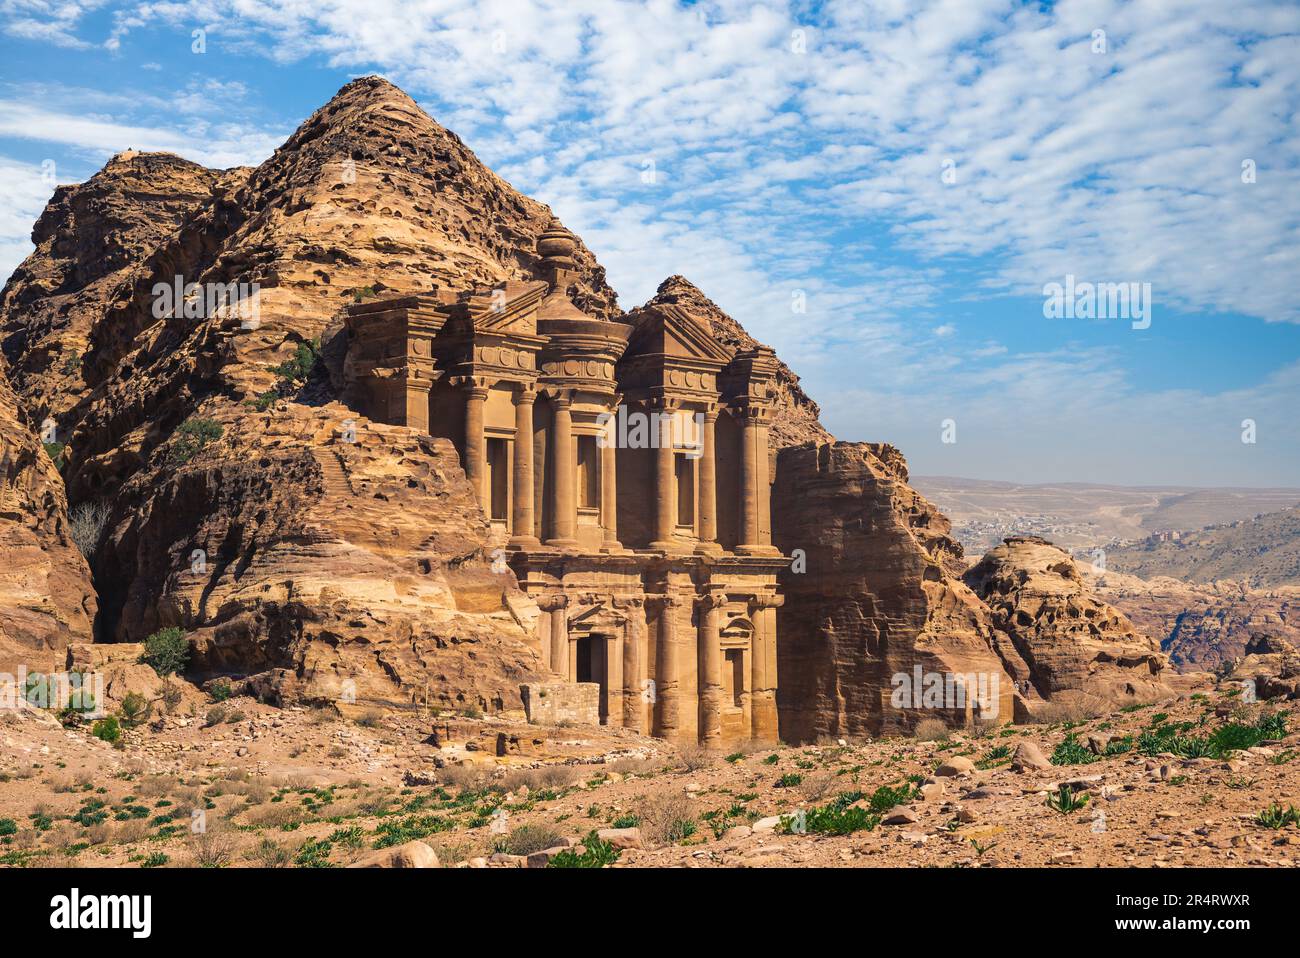 Ad Deir, The Monastery, located at petra in jodan Stock Photo